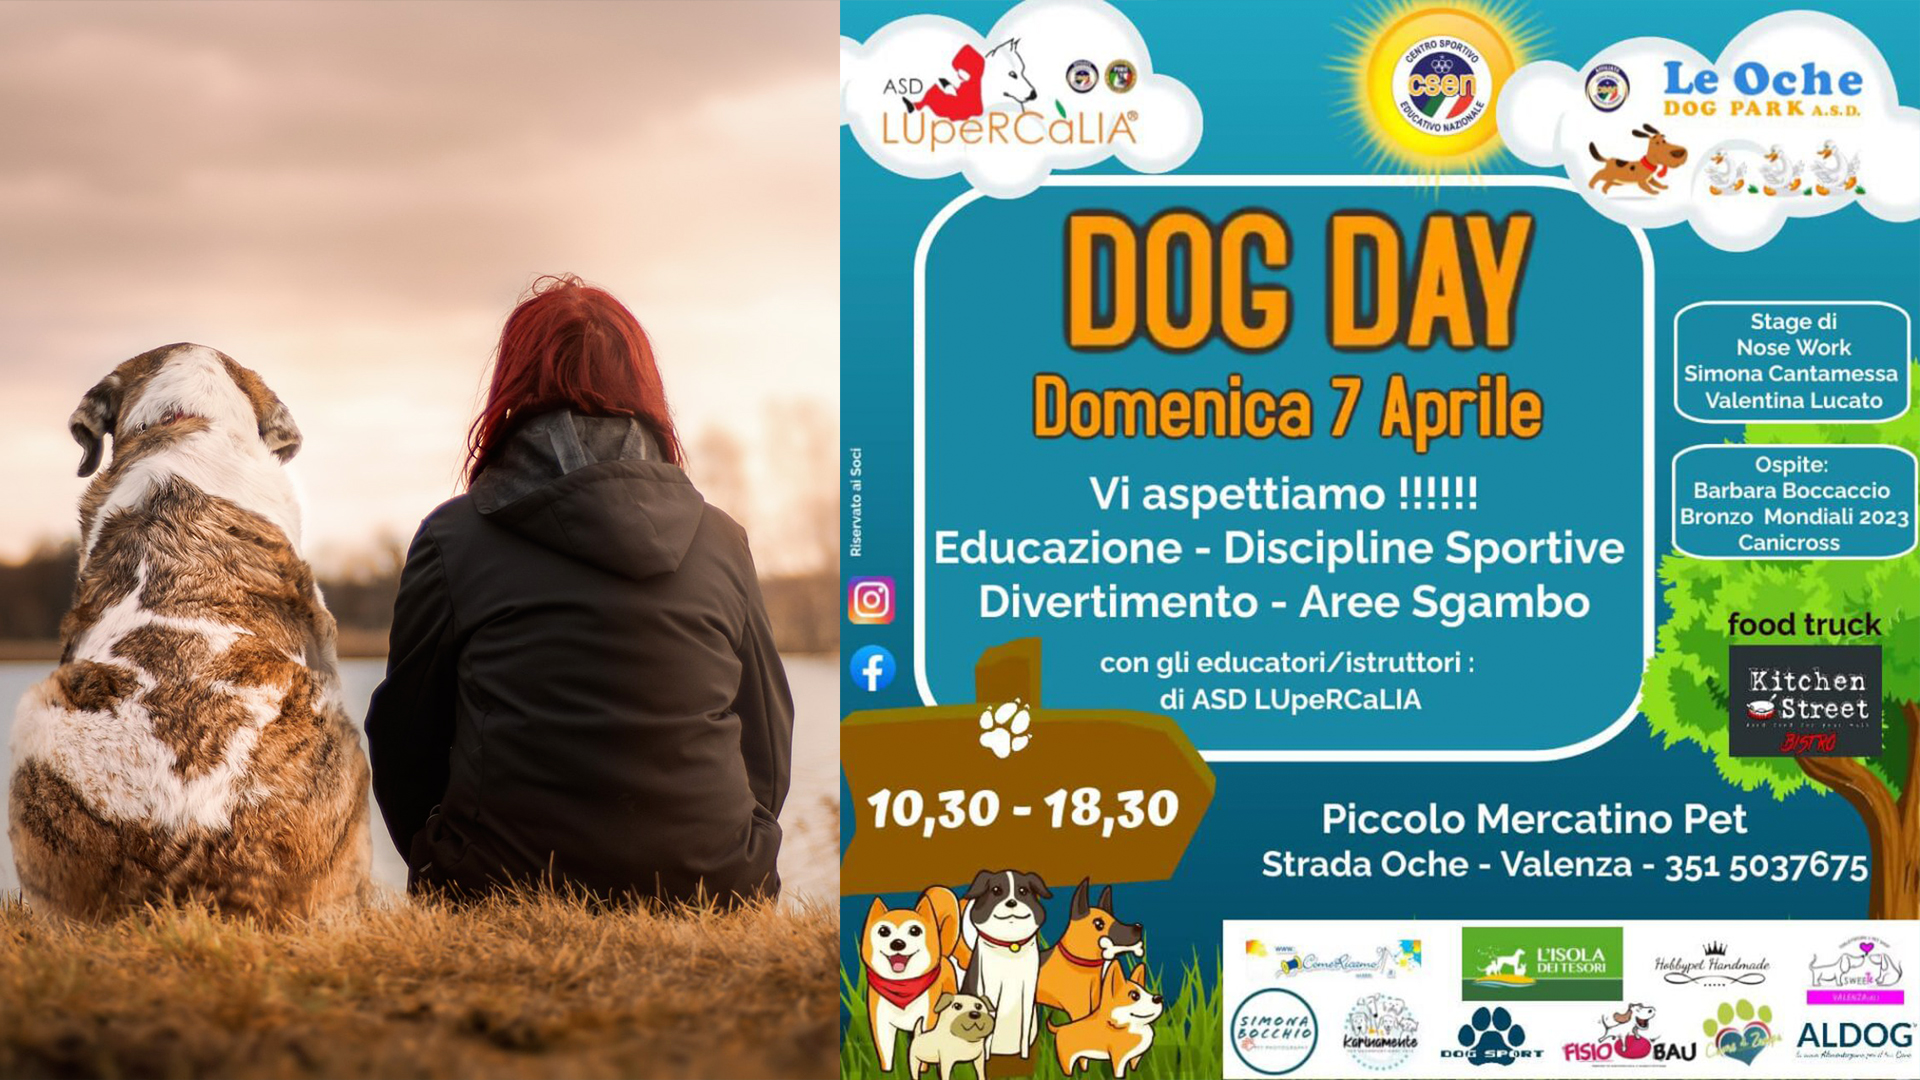 Valenza: ‘Dog Day’ domenica 7 aprile